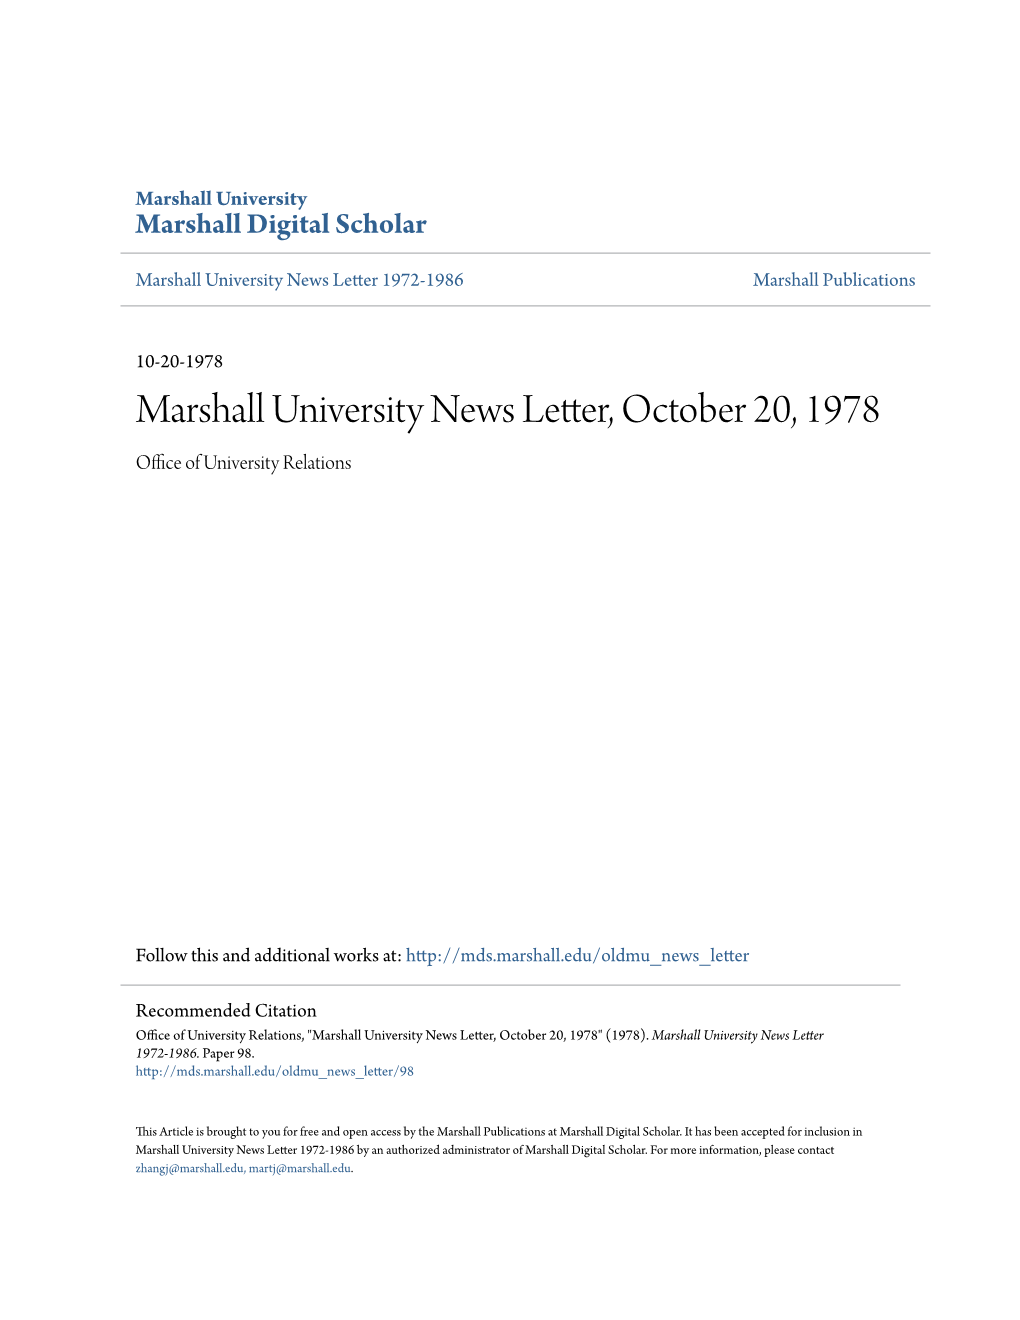 Marshall University News Letter, October 20, 1978 Office Ofni U Versity Relations